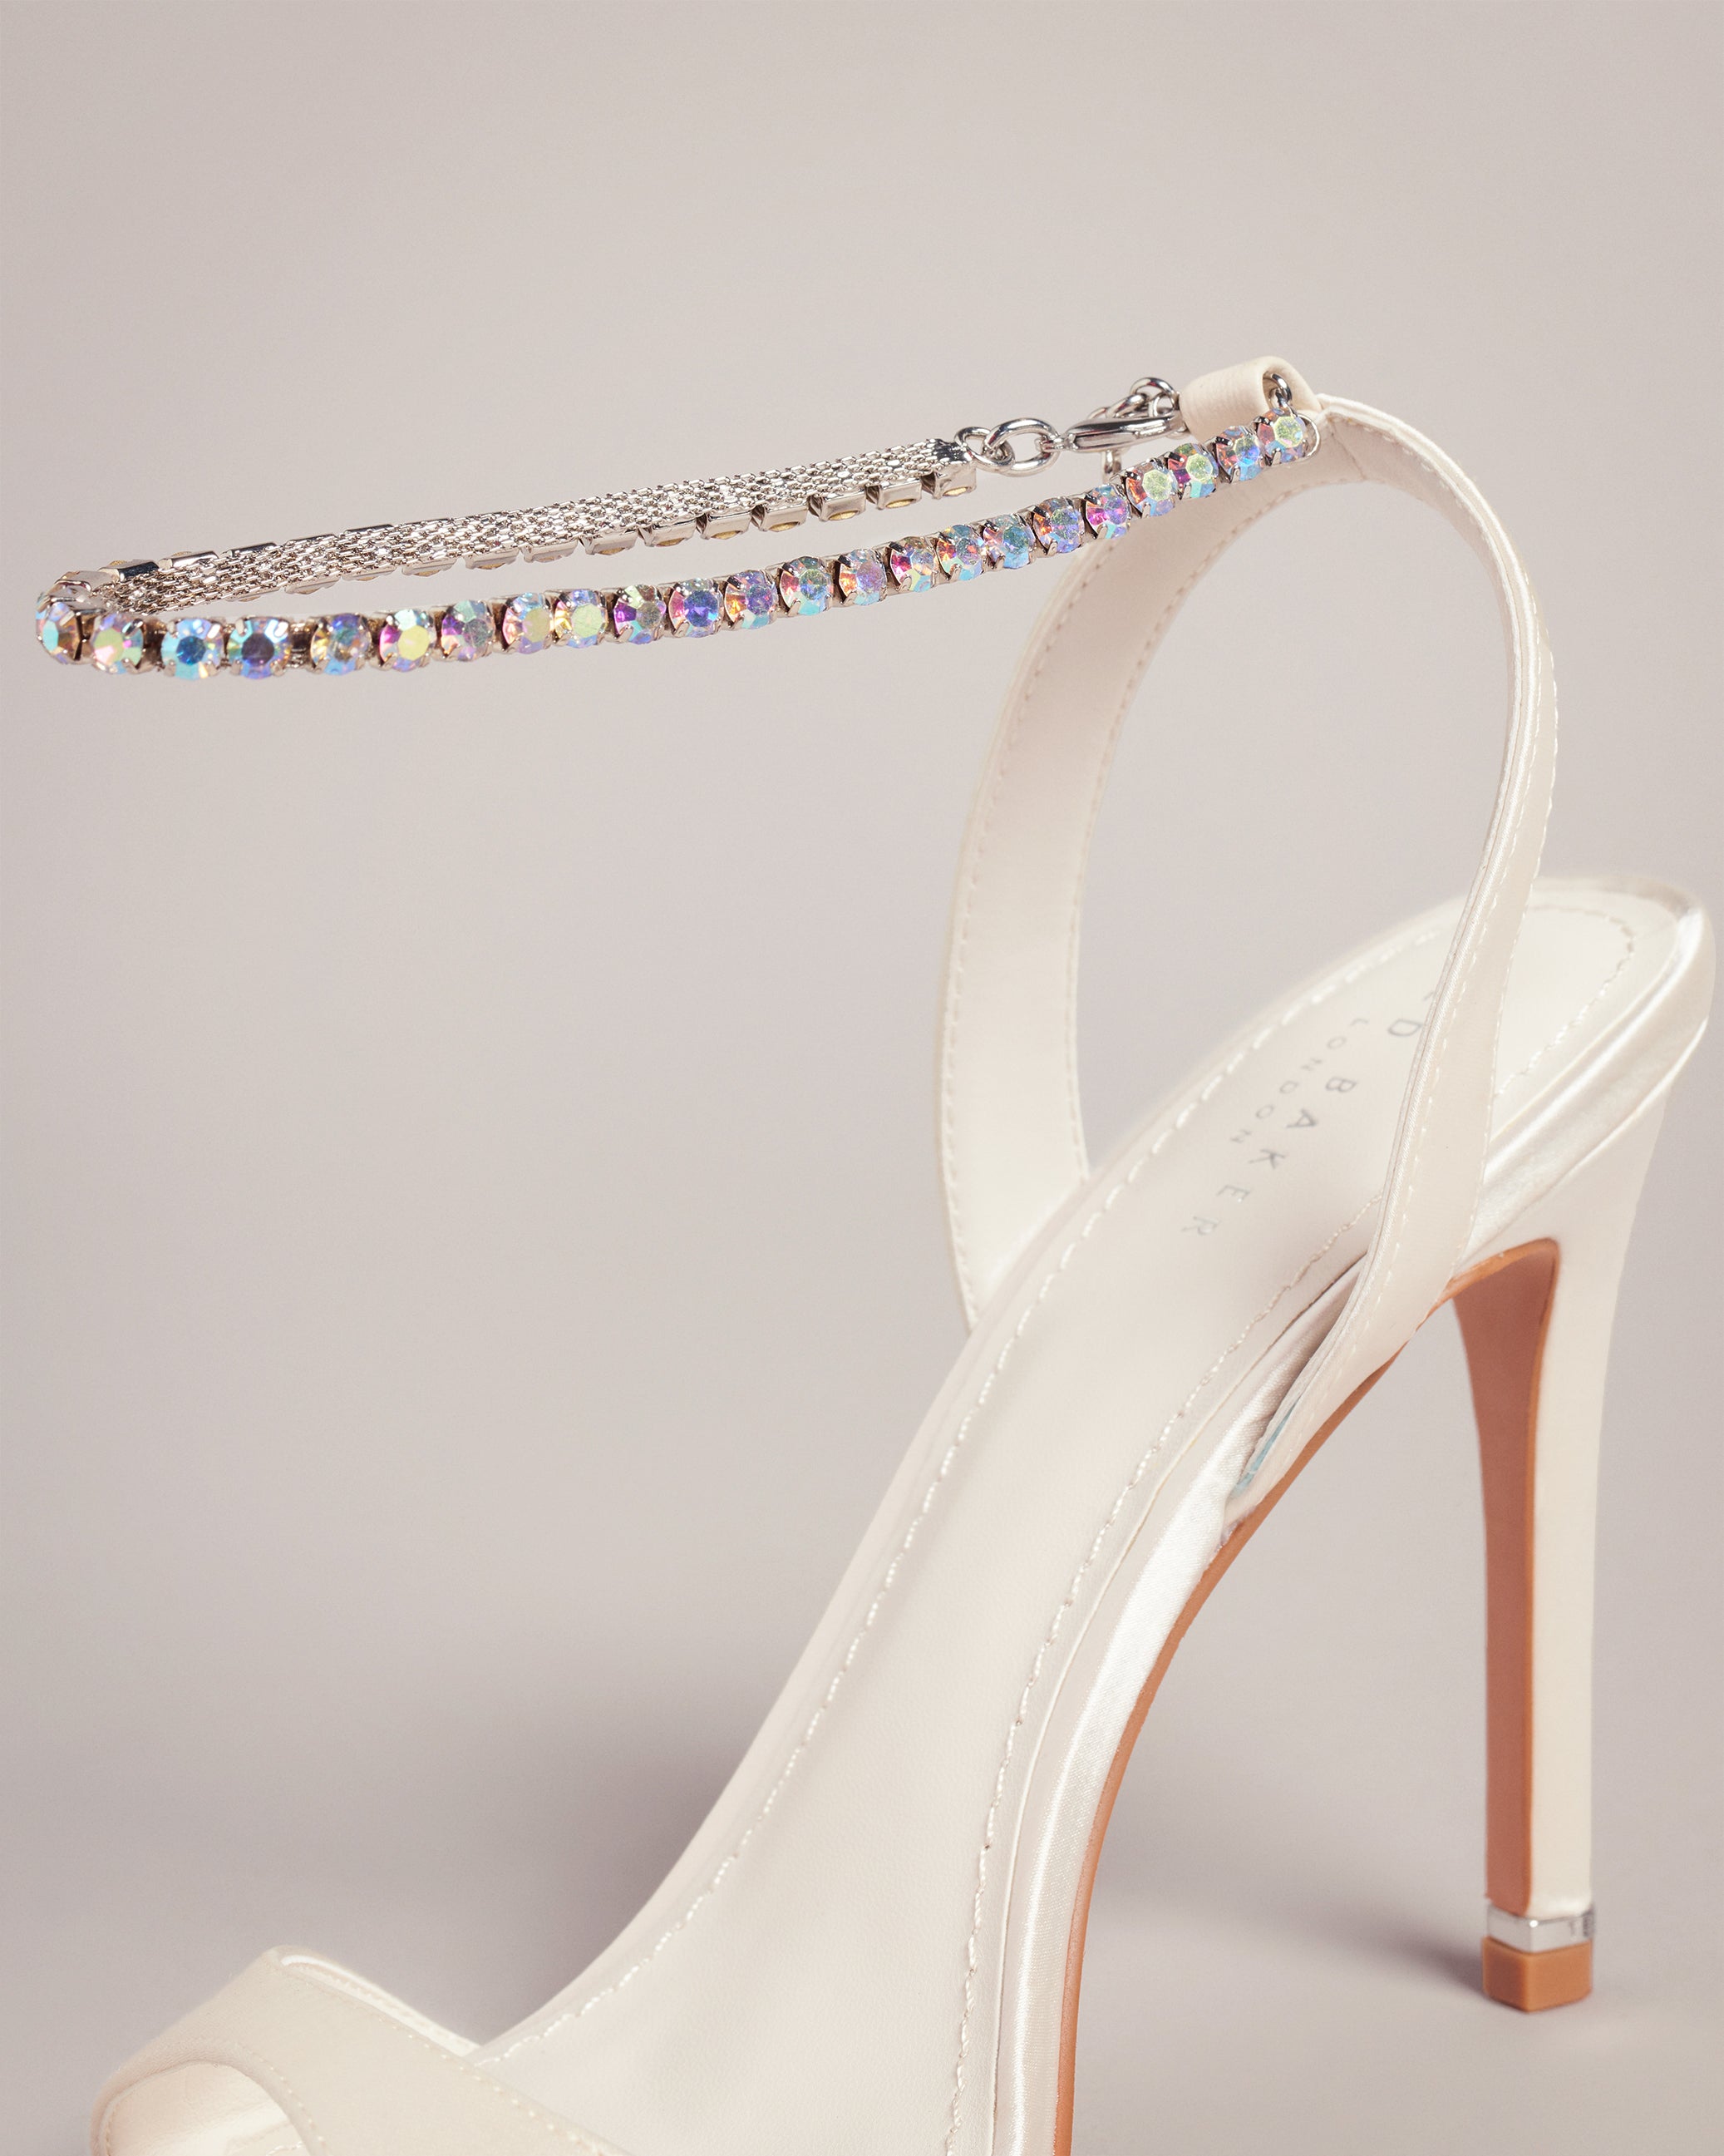 Liz Baker size 6.5 cream low heel shoes - $9 - From Michelle